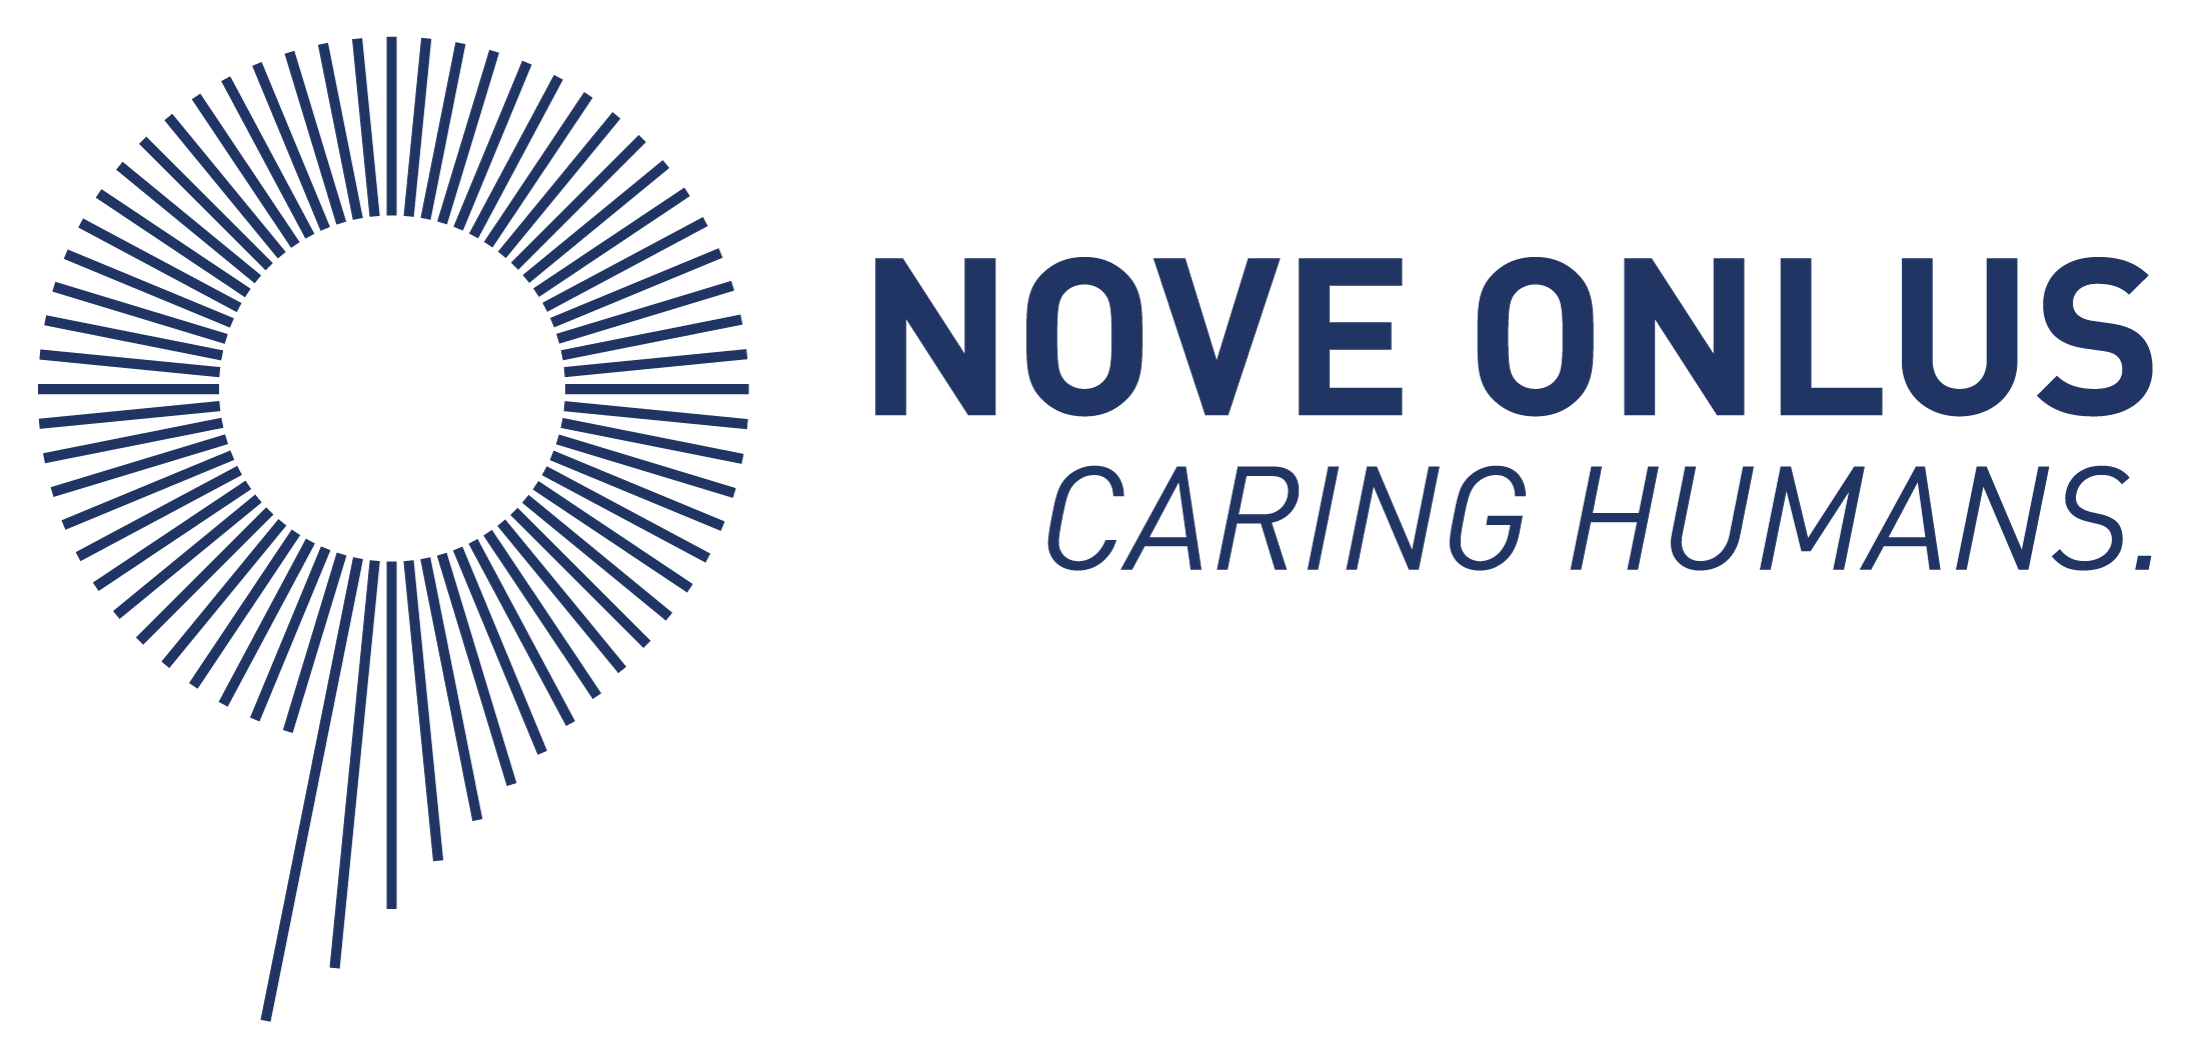 Nove Onlus organization logo